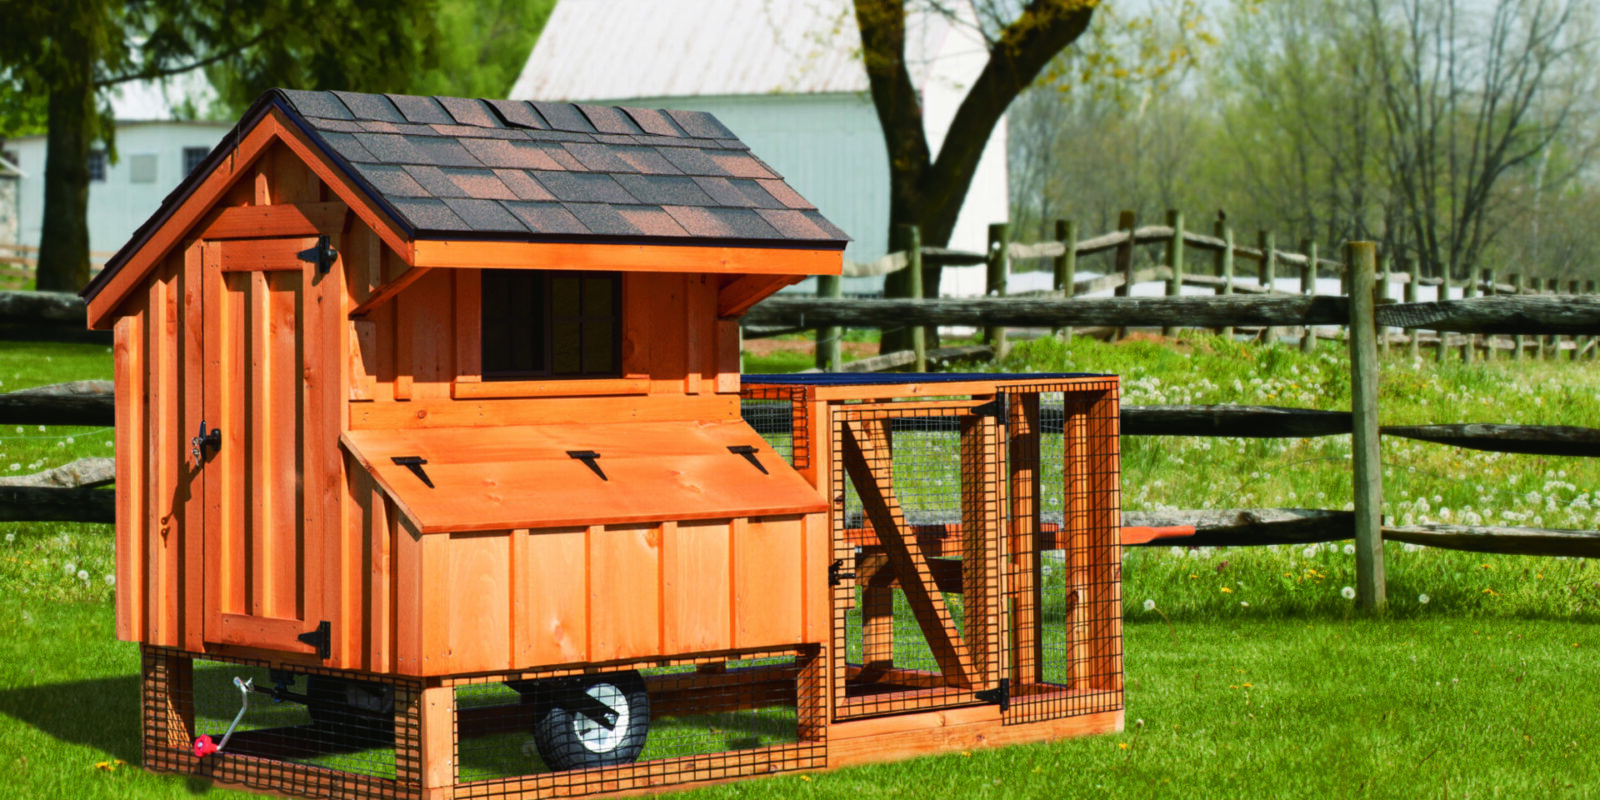 tractor style chicken coop ideas